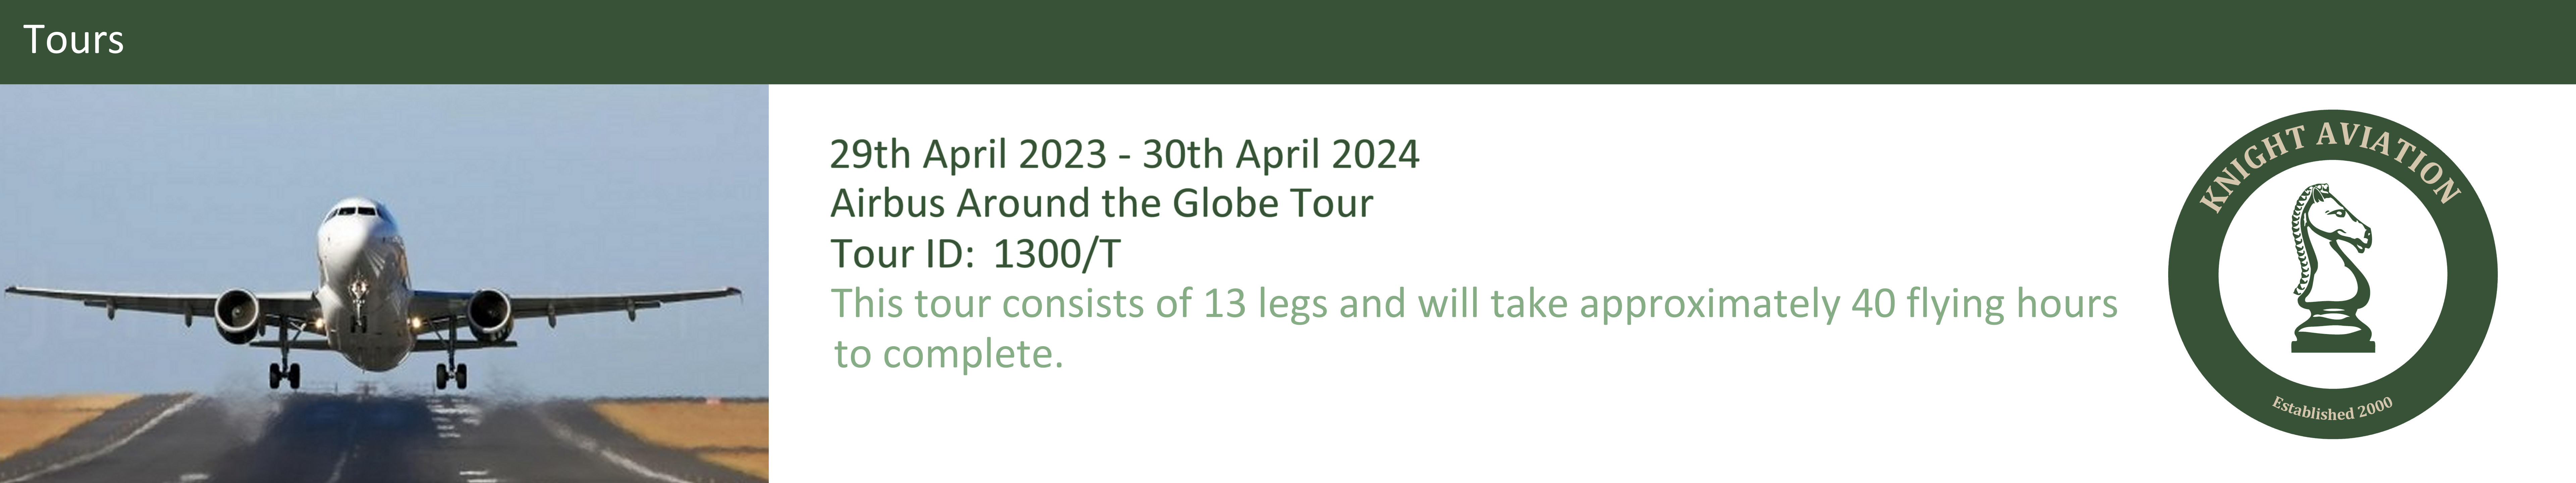 Airbus Around the Globe Tour 2023